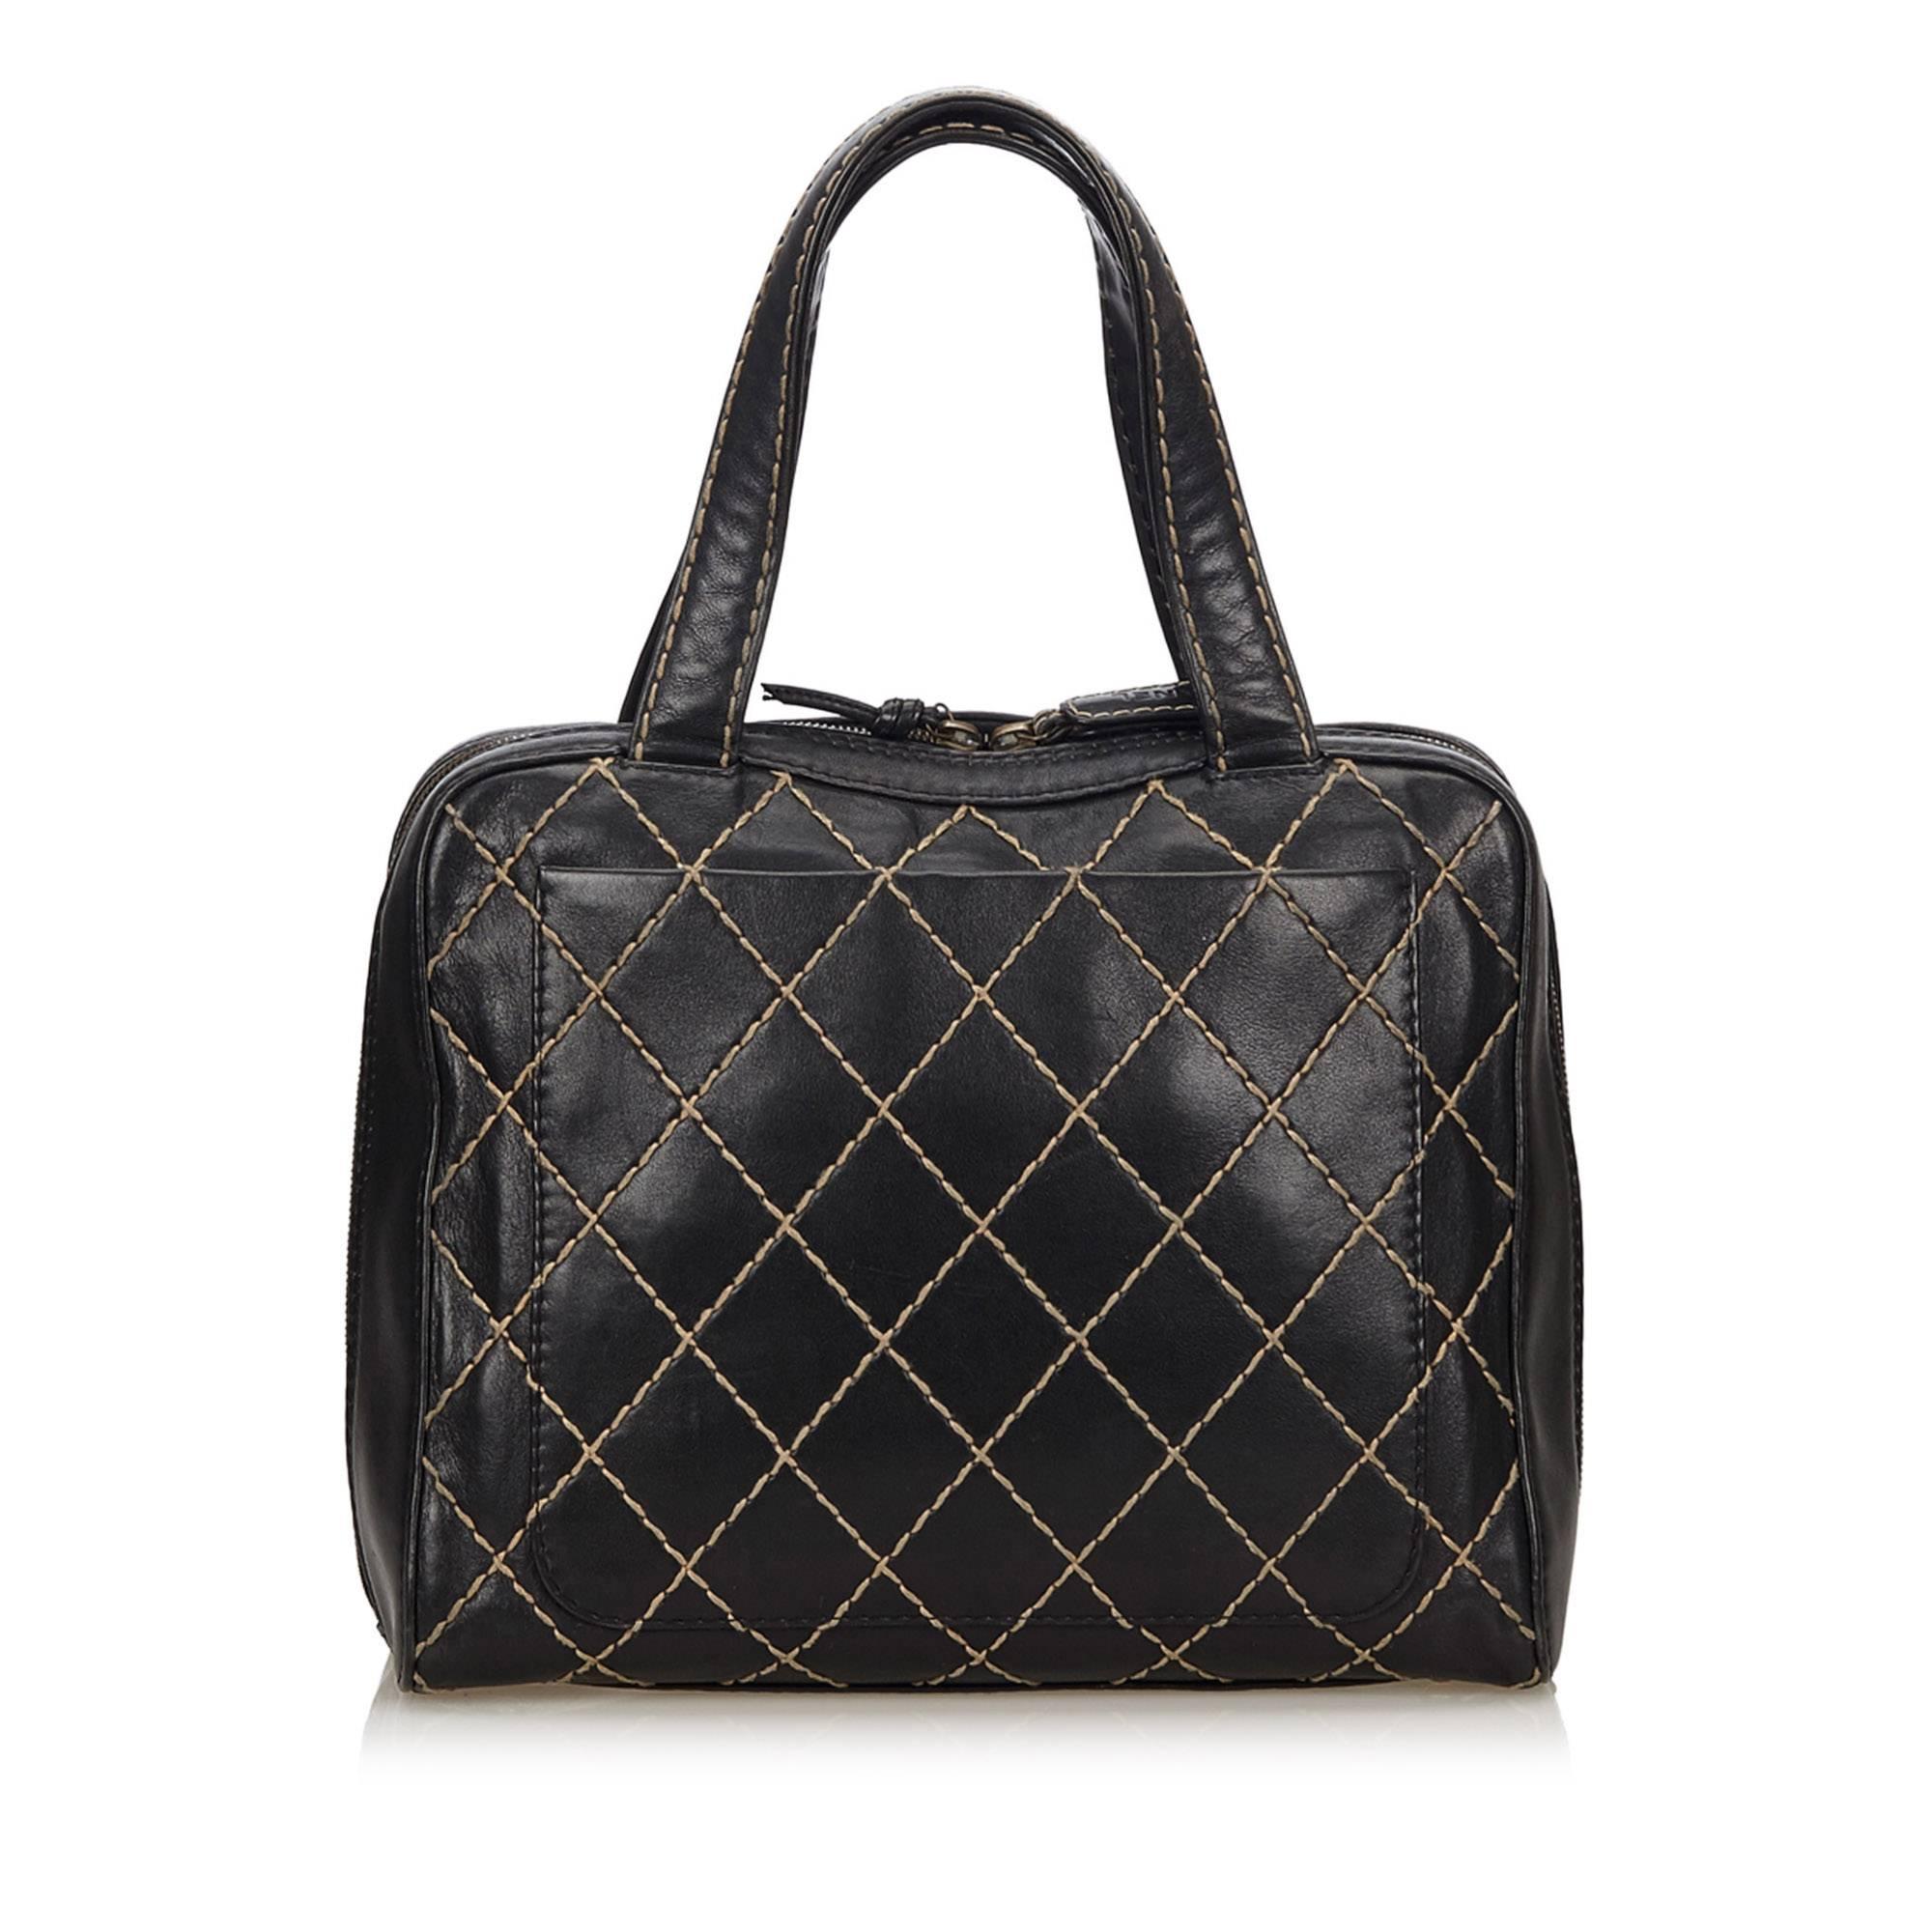 Chanel Black Lambskin Leather Surpique Handbag In Good Condition For Sale In Orlando, FL